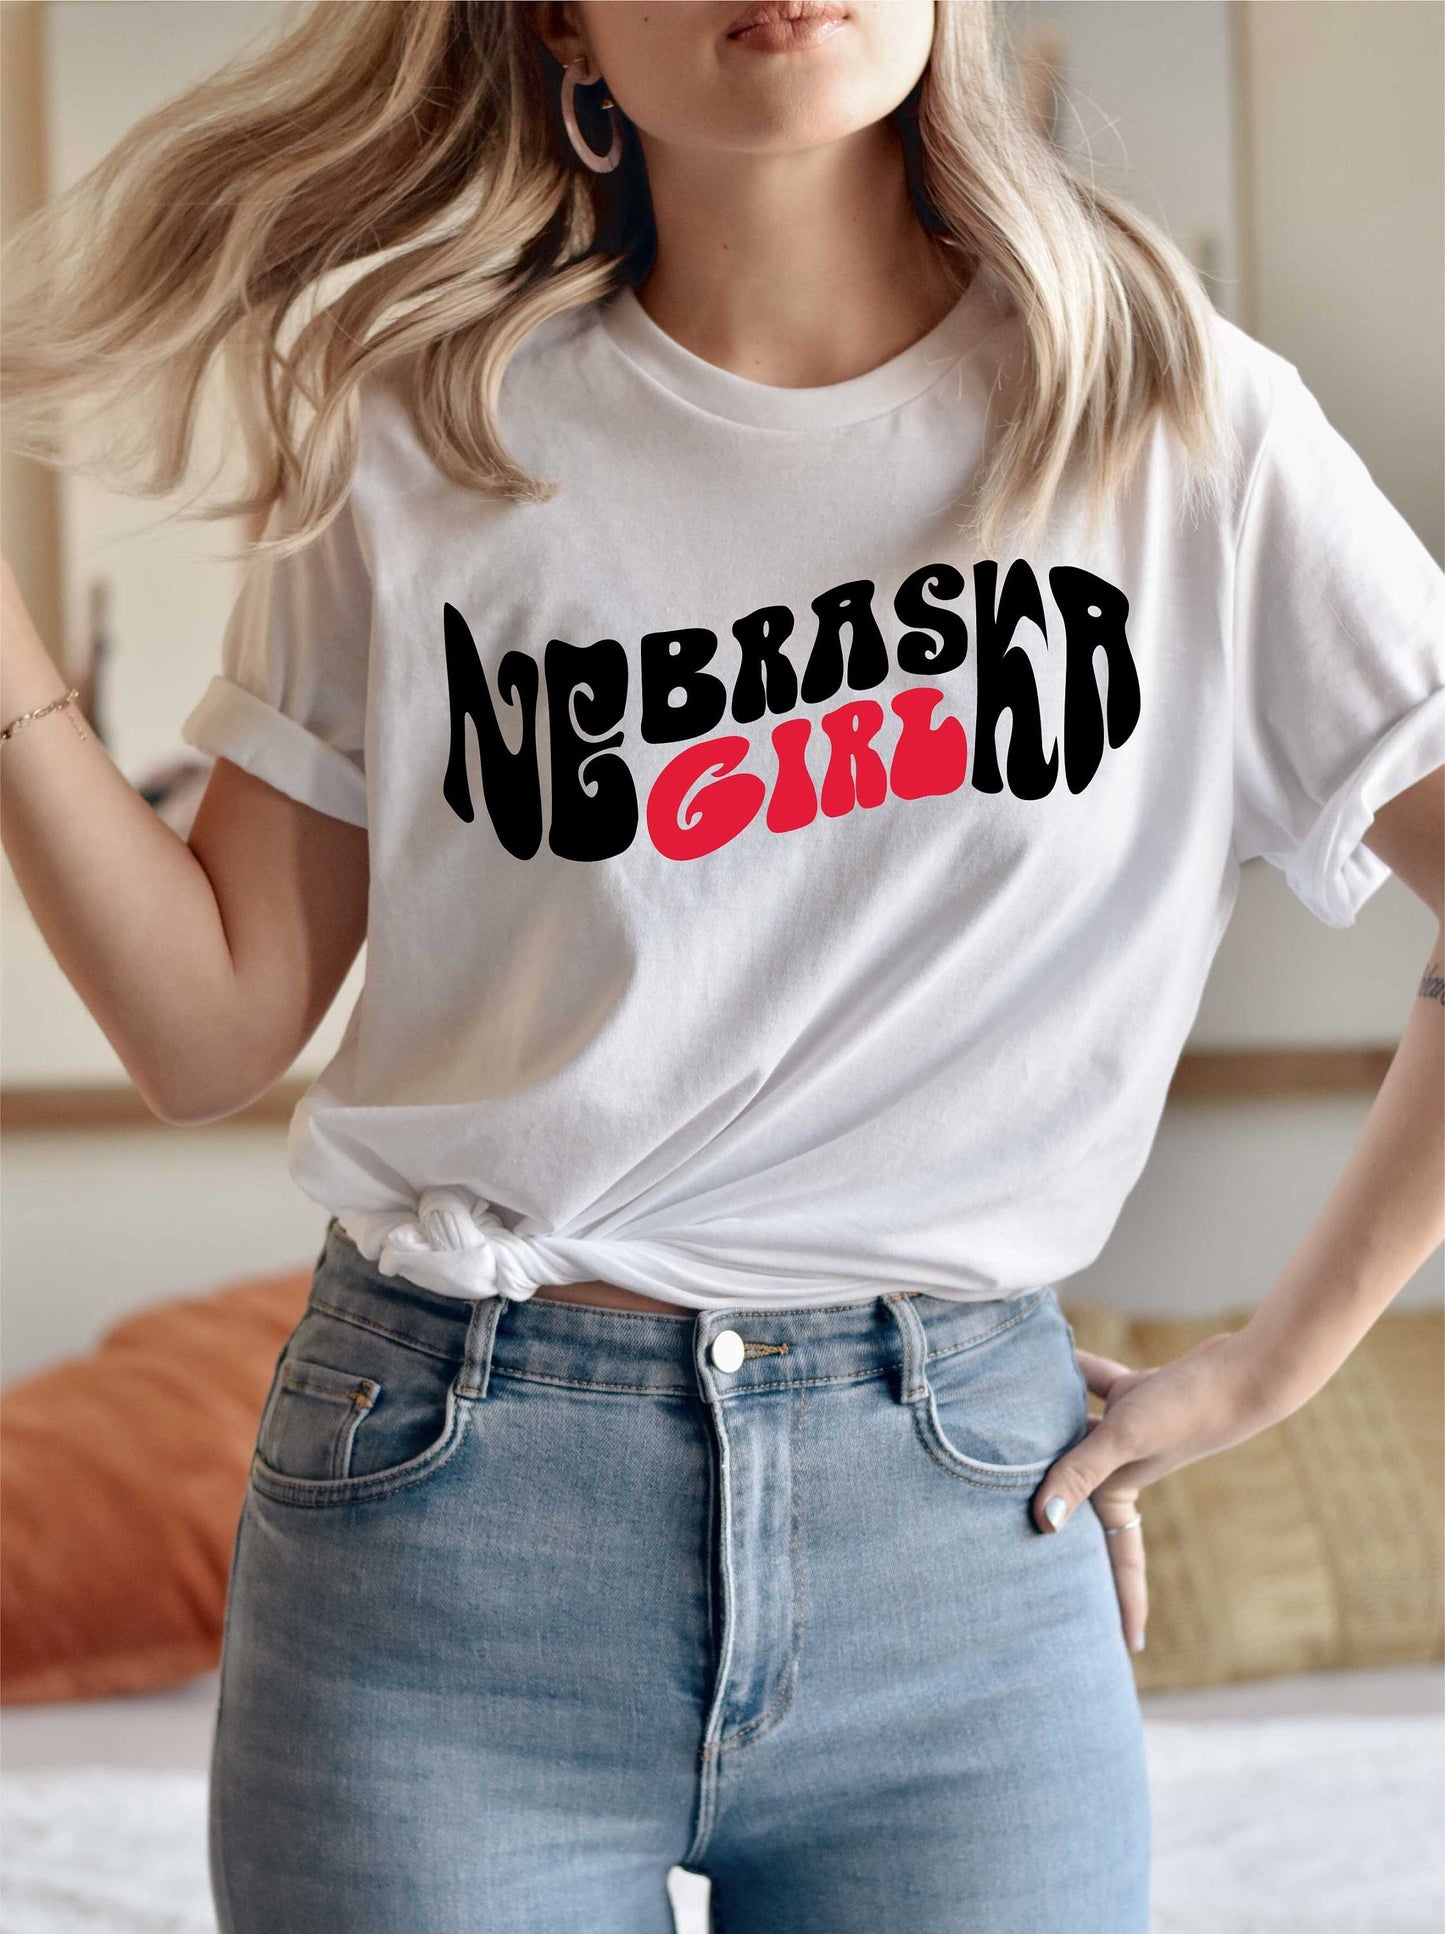 Nebraska Girl vg, Nebraska svg, Nebraska Girl png, Nebraska Retro Wavy Letters svg, Digital Design